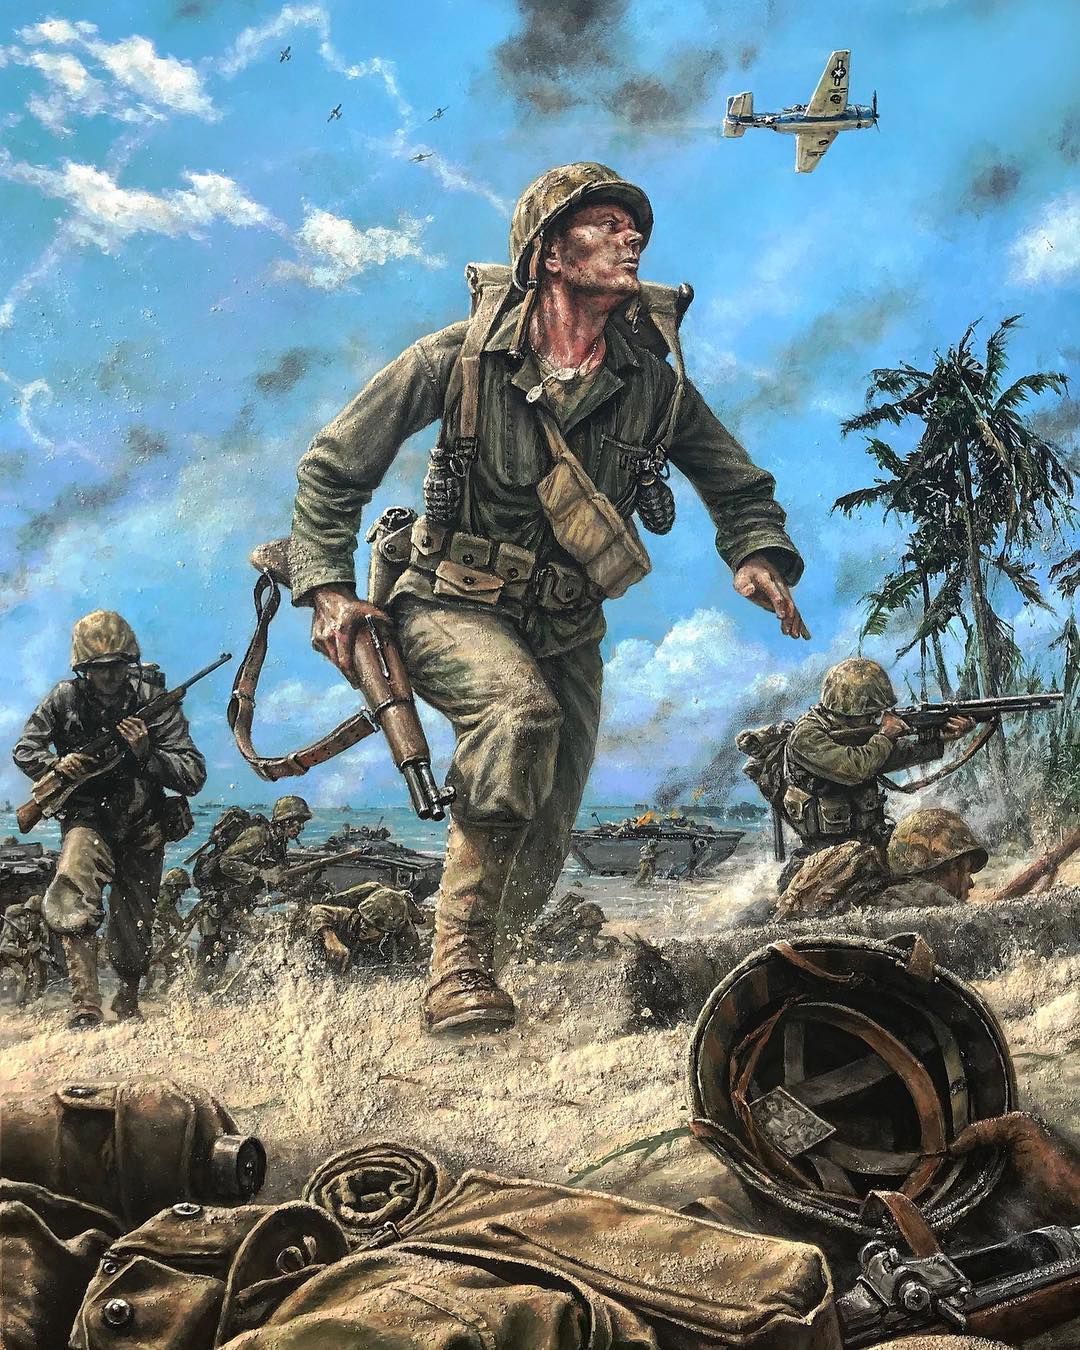 General 1080x1350 United States Marine Corps World War II soldier war artwork military